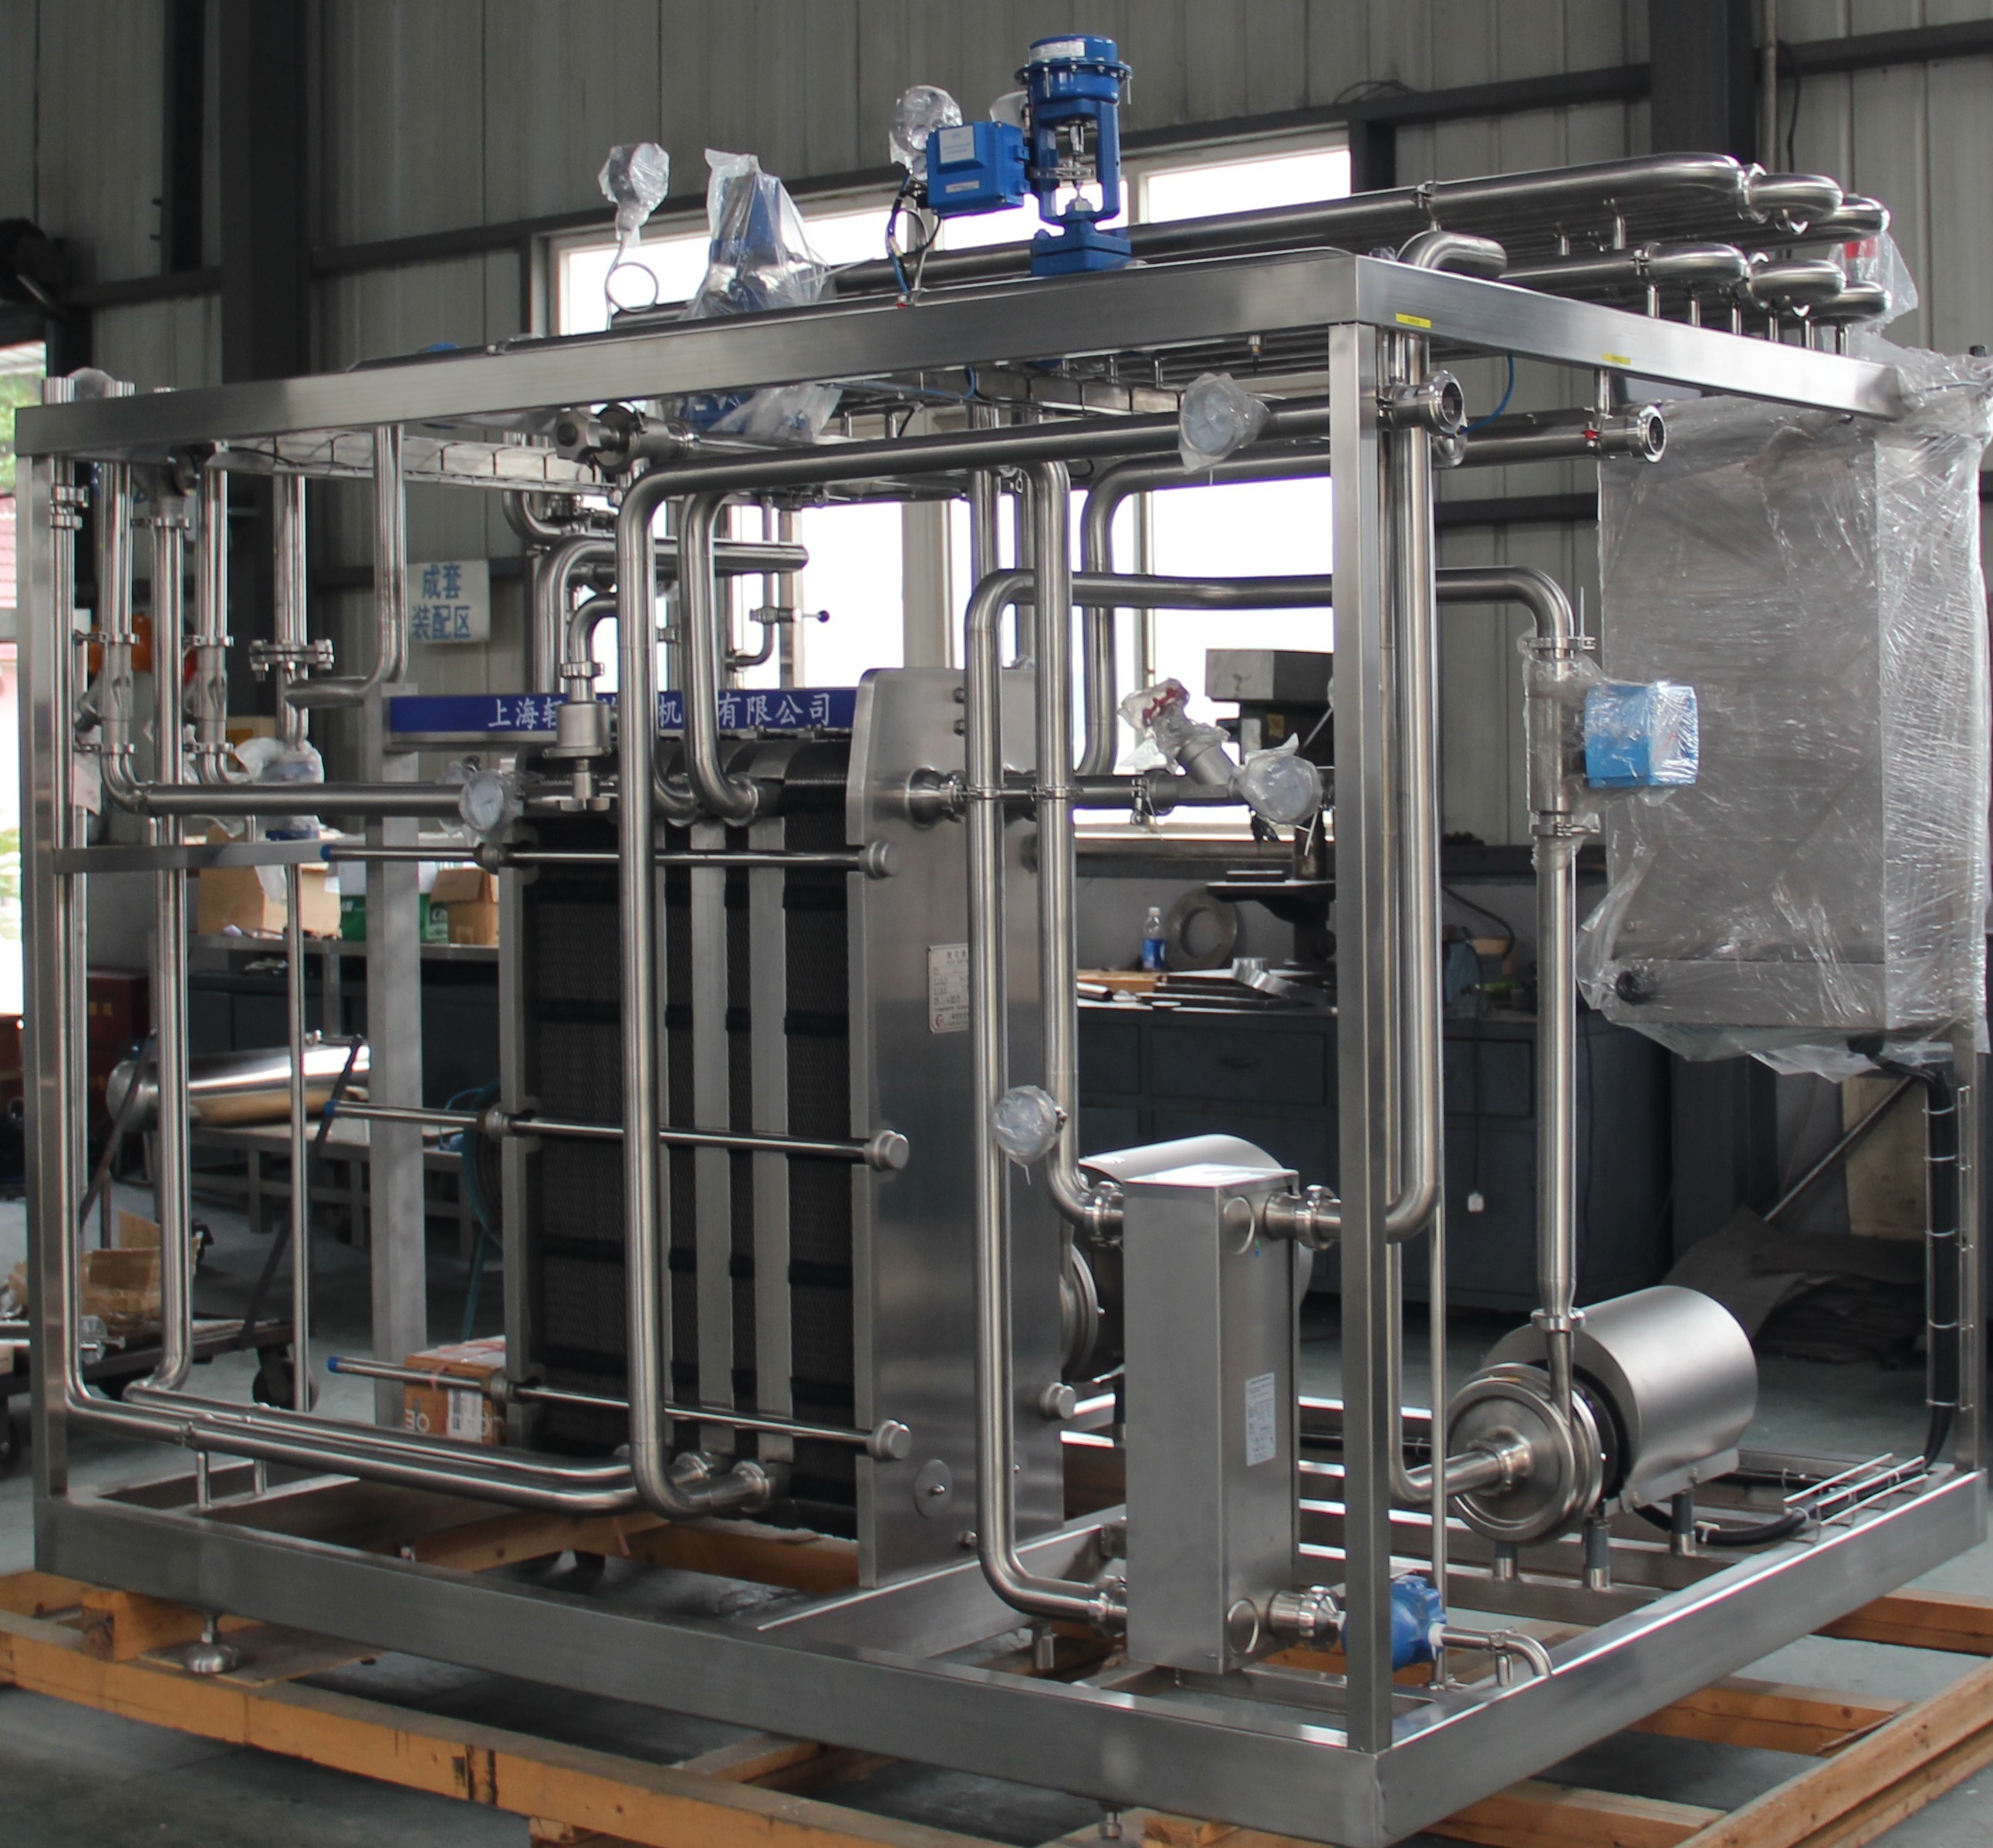 China Liquid Food Pasteurizer Machine , Automatic Milk Pasteurization Machine wholesale